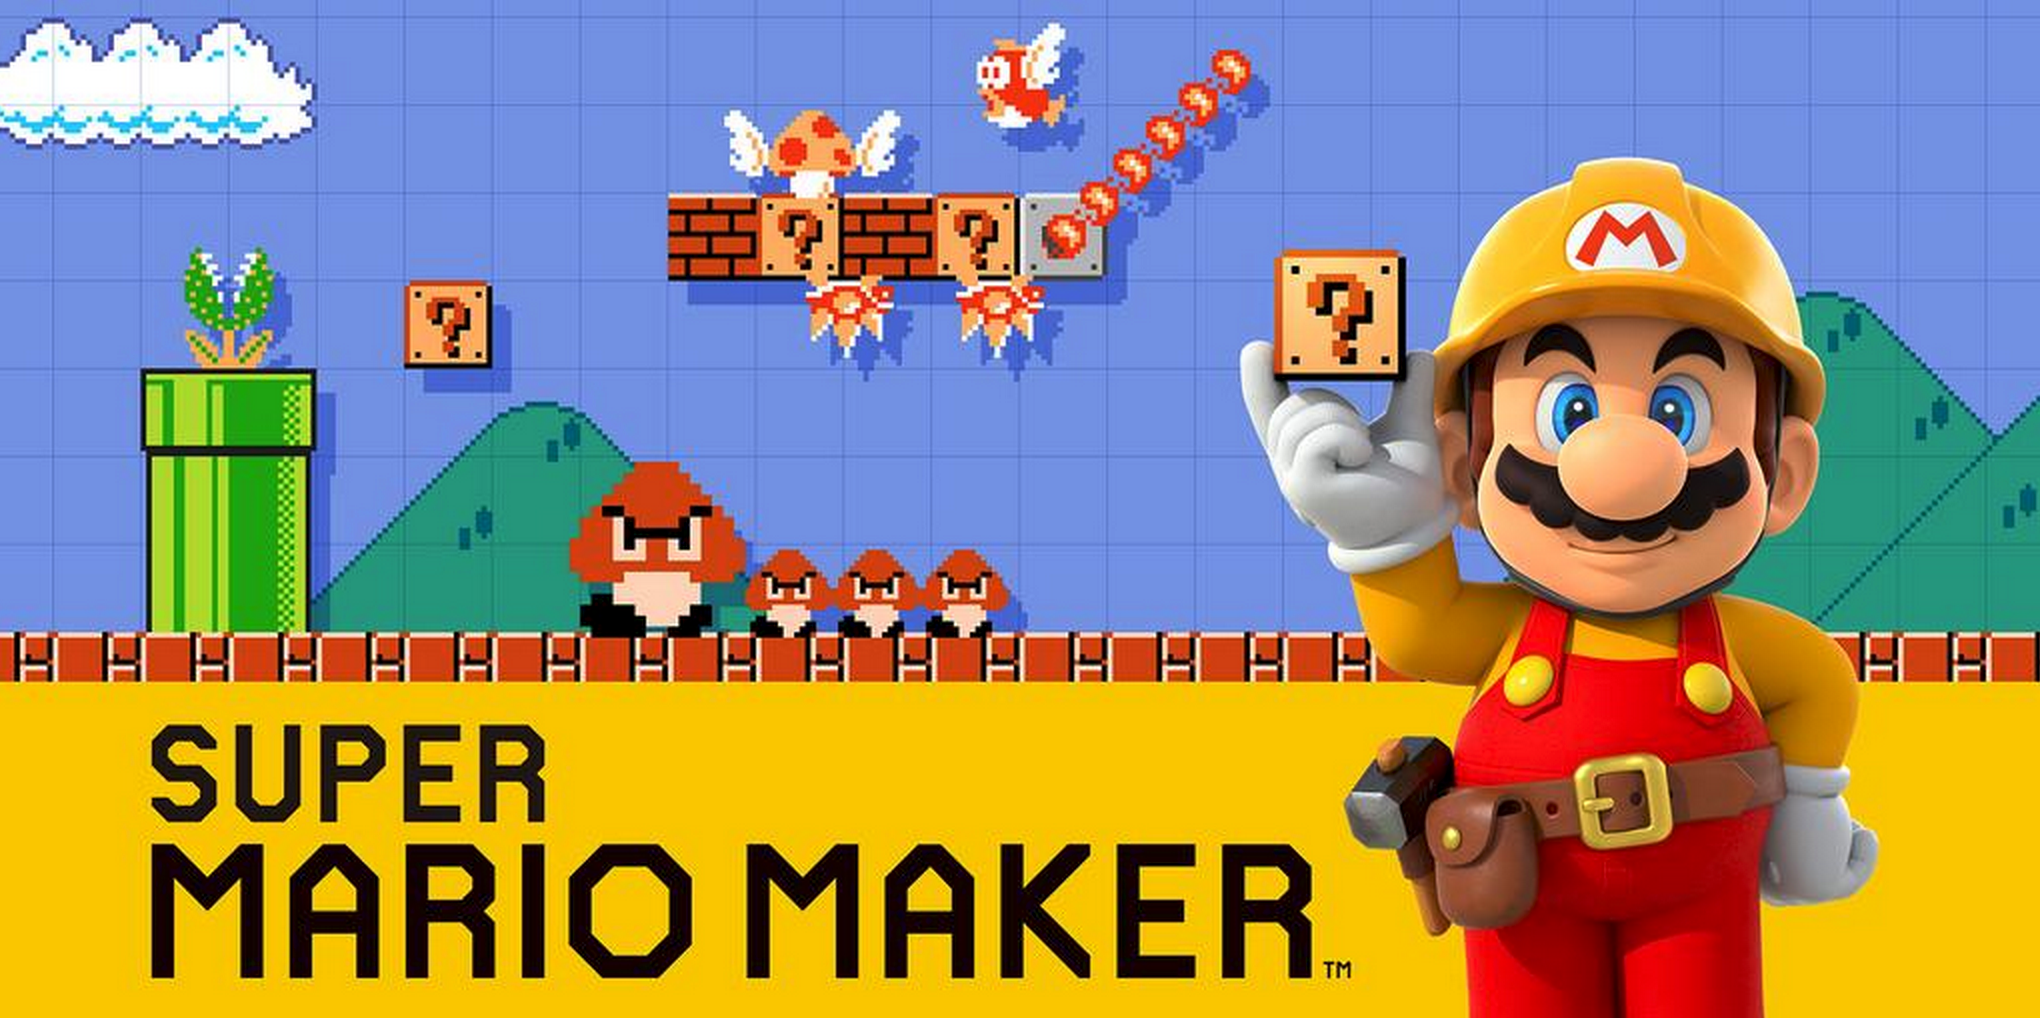 Mario maker wii. Марио мейкер 3. Супер Марио игра. Super Mario maker. Super Mario maker [3ds].